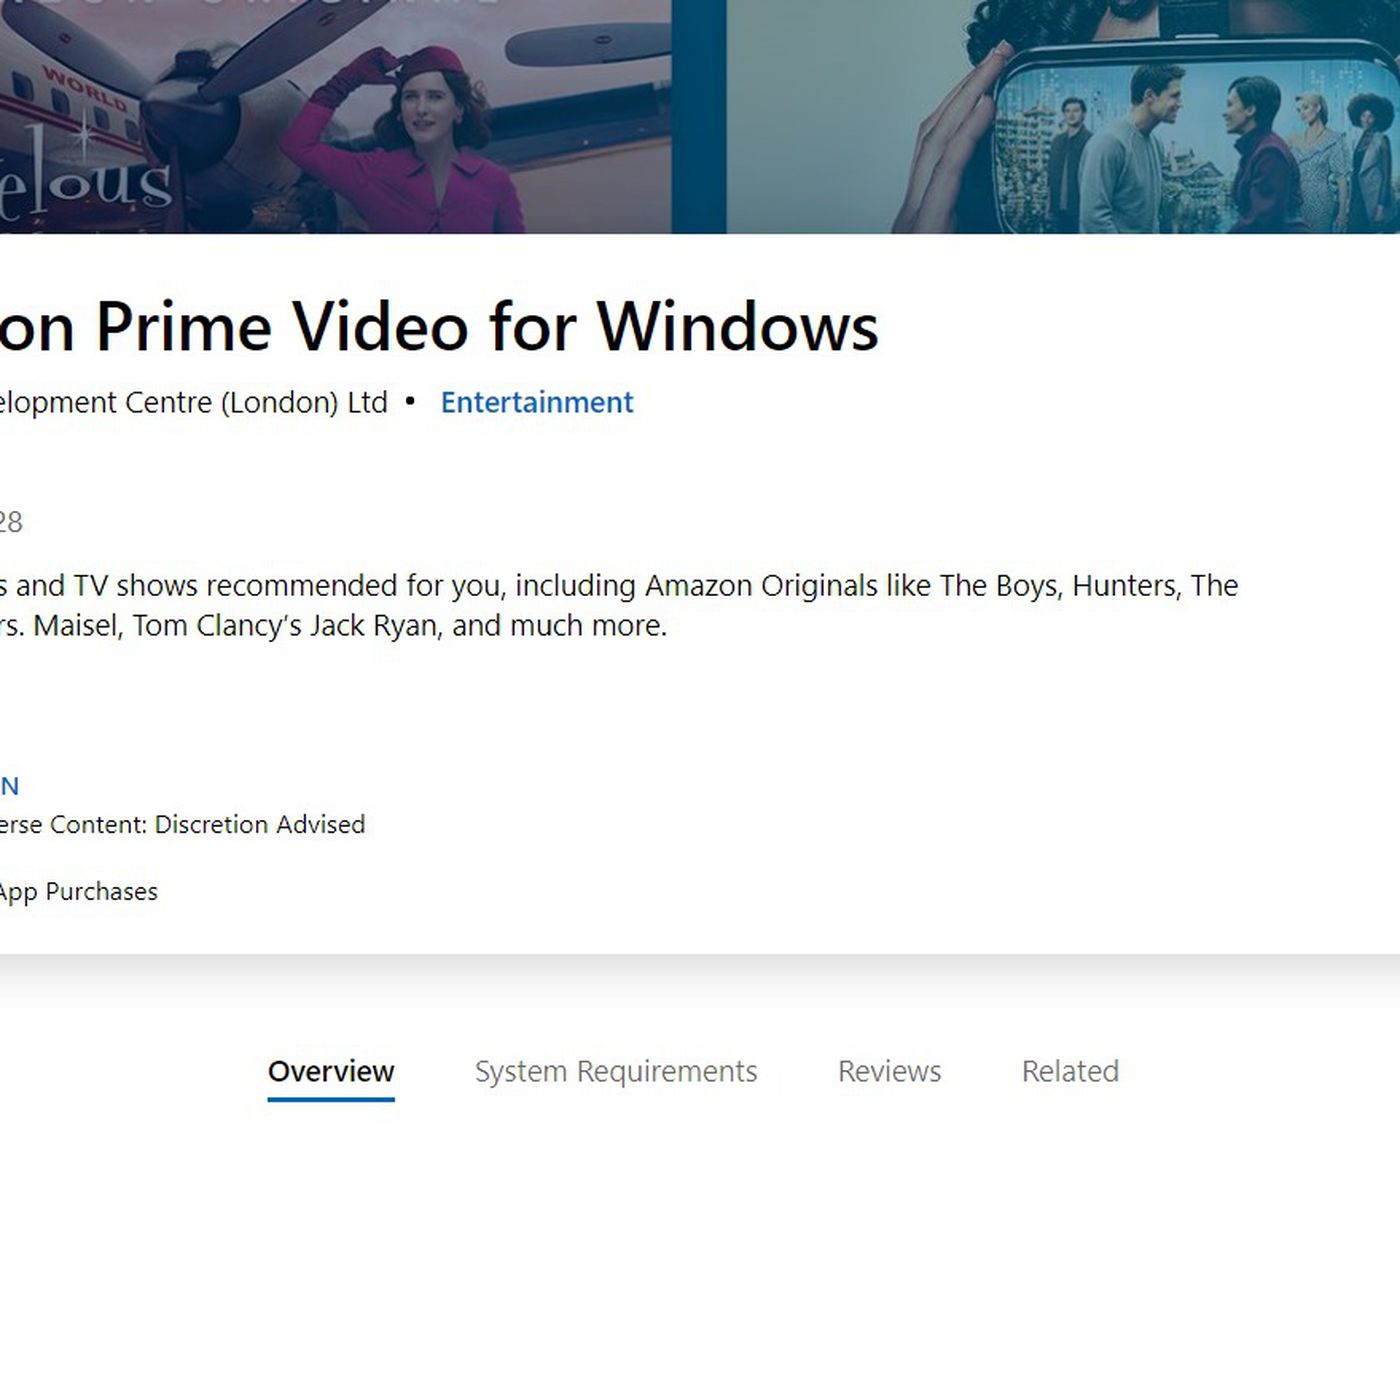 Amazon Prime Video launches Windows 10 desktop app - The Verge